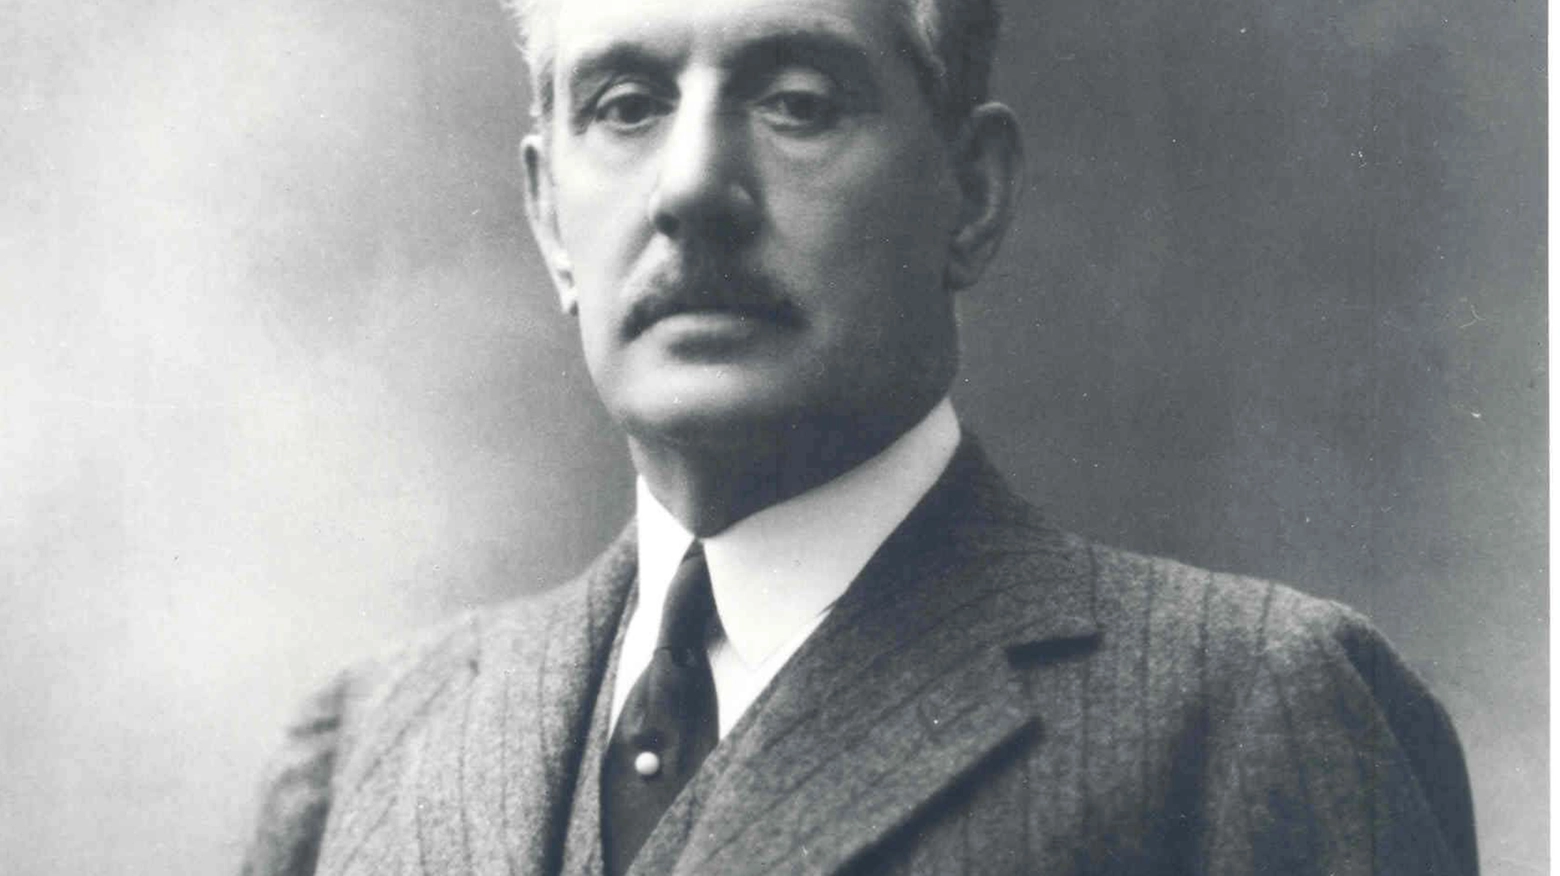 Giacomo Puccini 